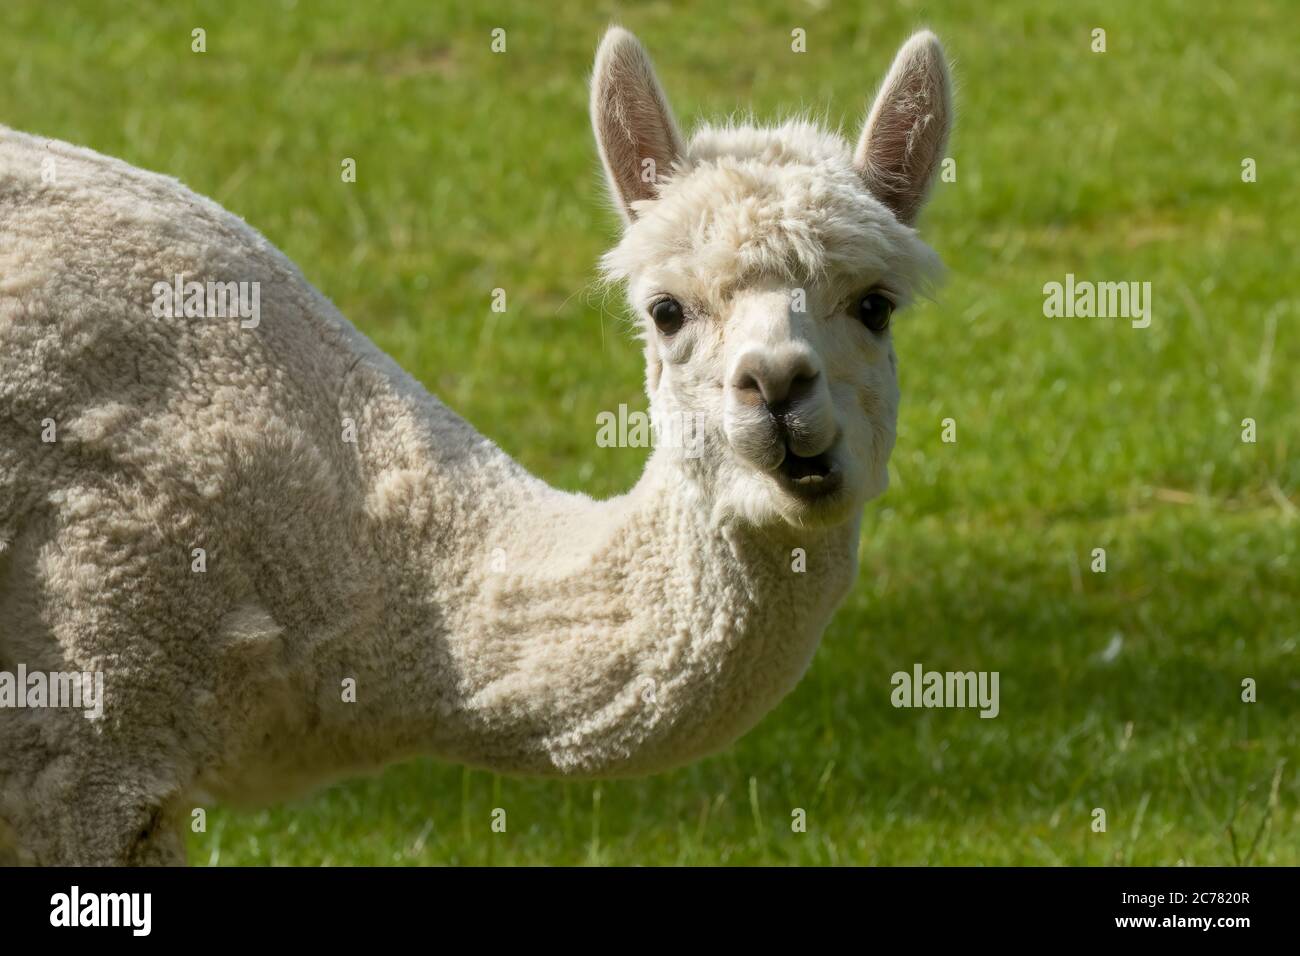 Freshly shaved Alpaca, Vicugna pacos, goofy face llama expression Stock Photo